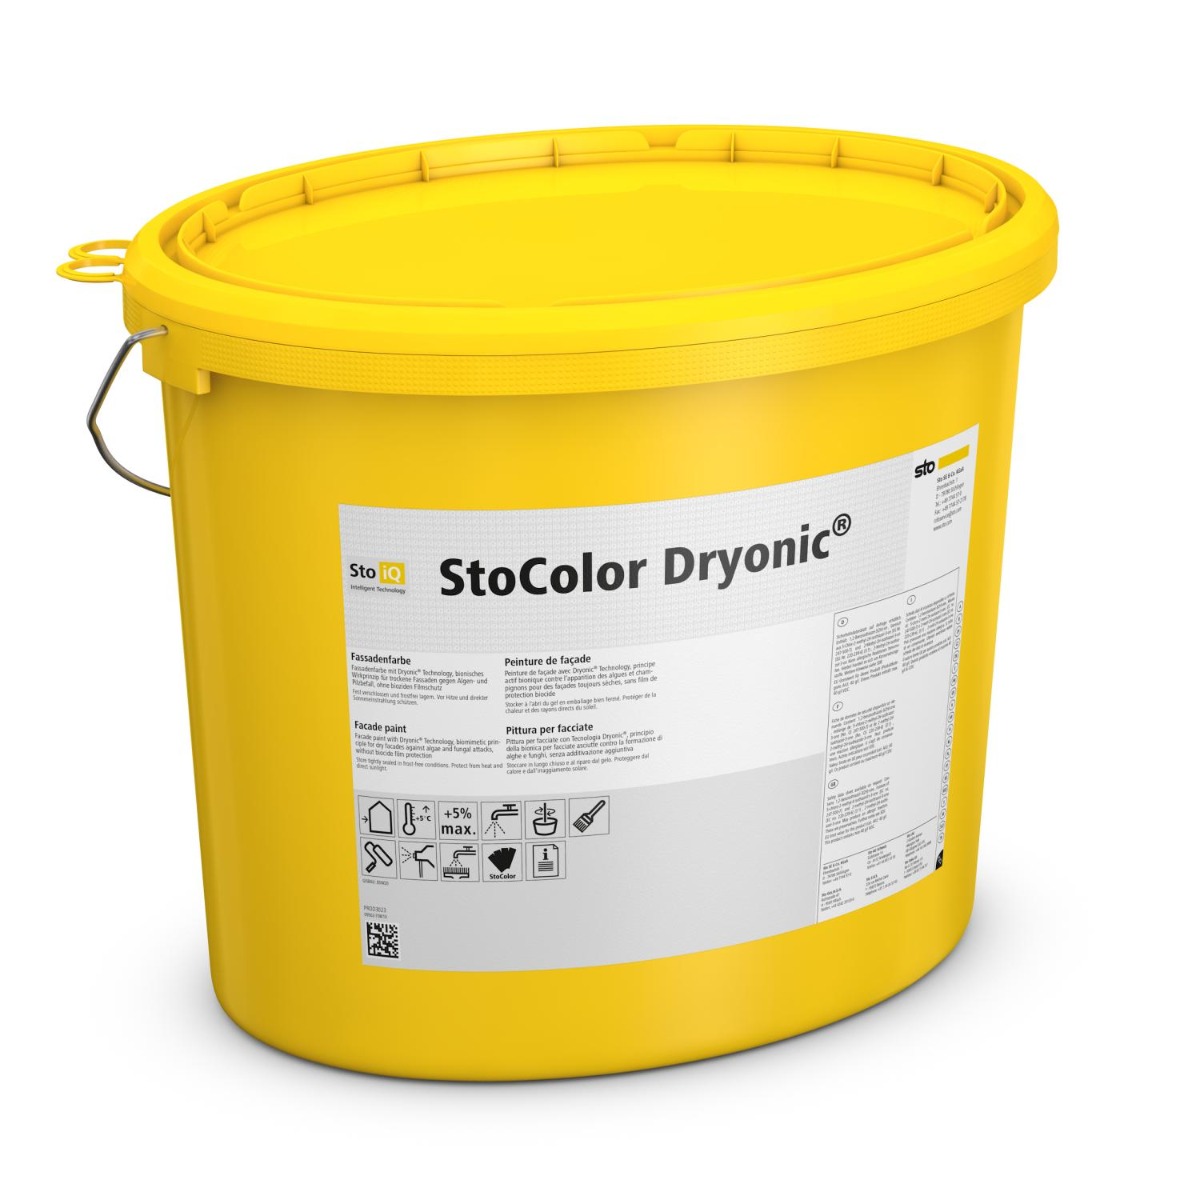 StoColor Dryonic -Farbtonklasse II 5 Liter-5 Liter Eimer